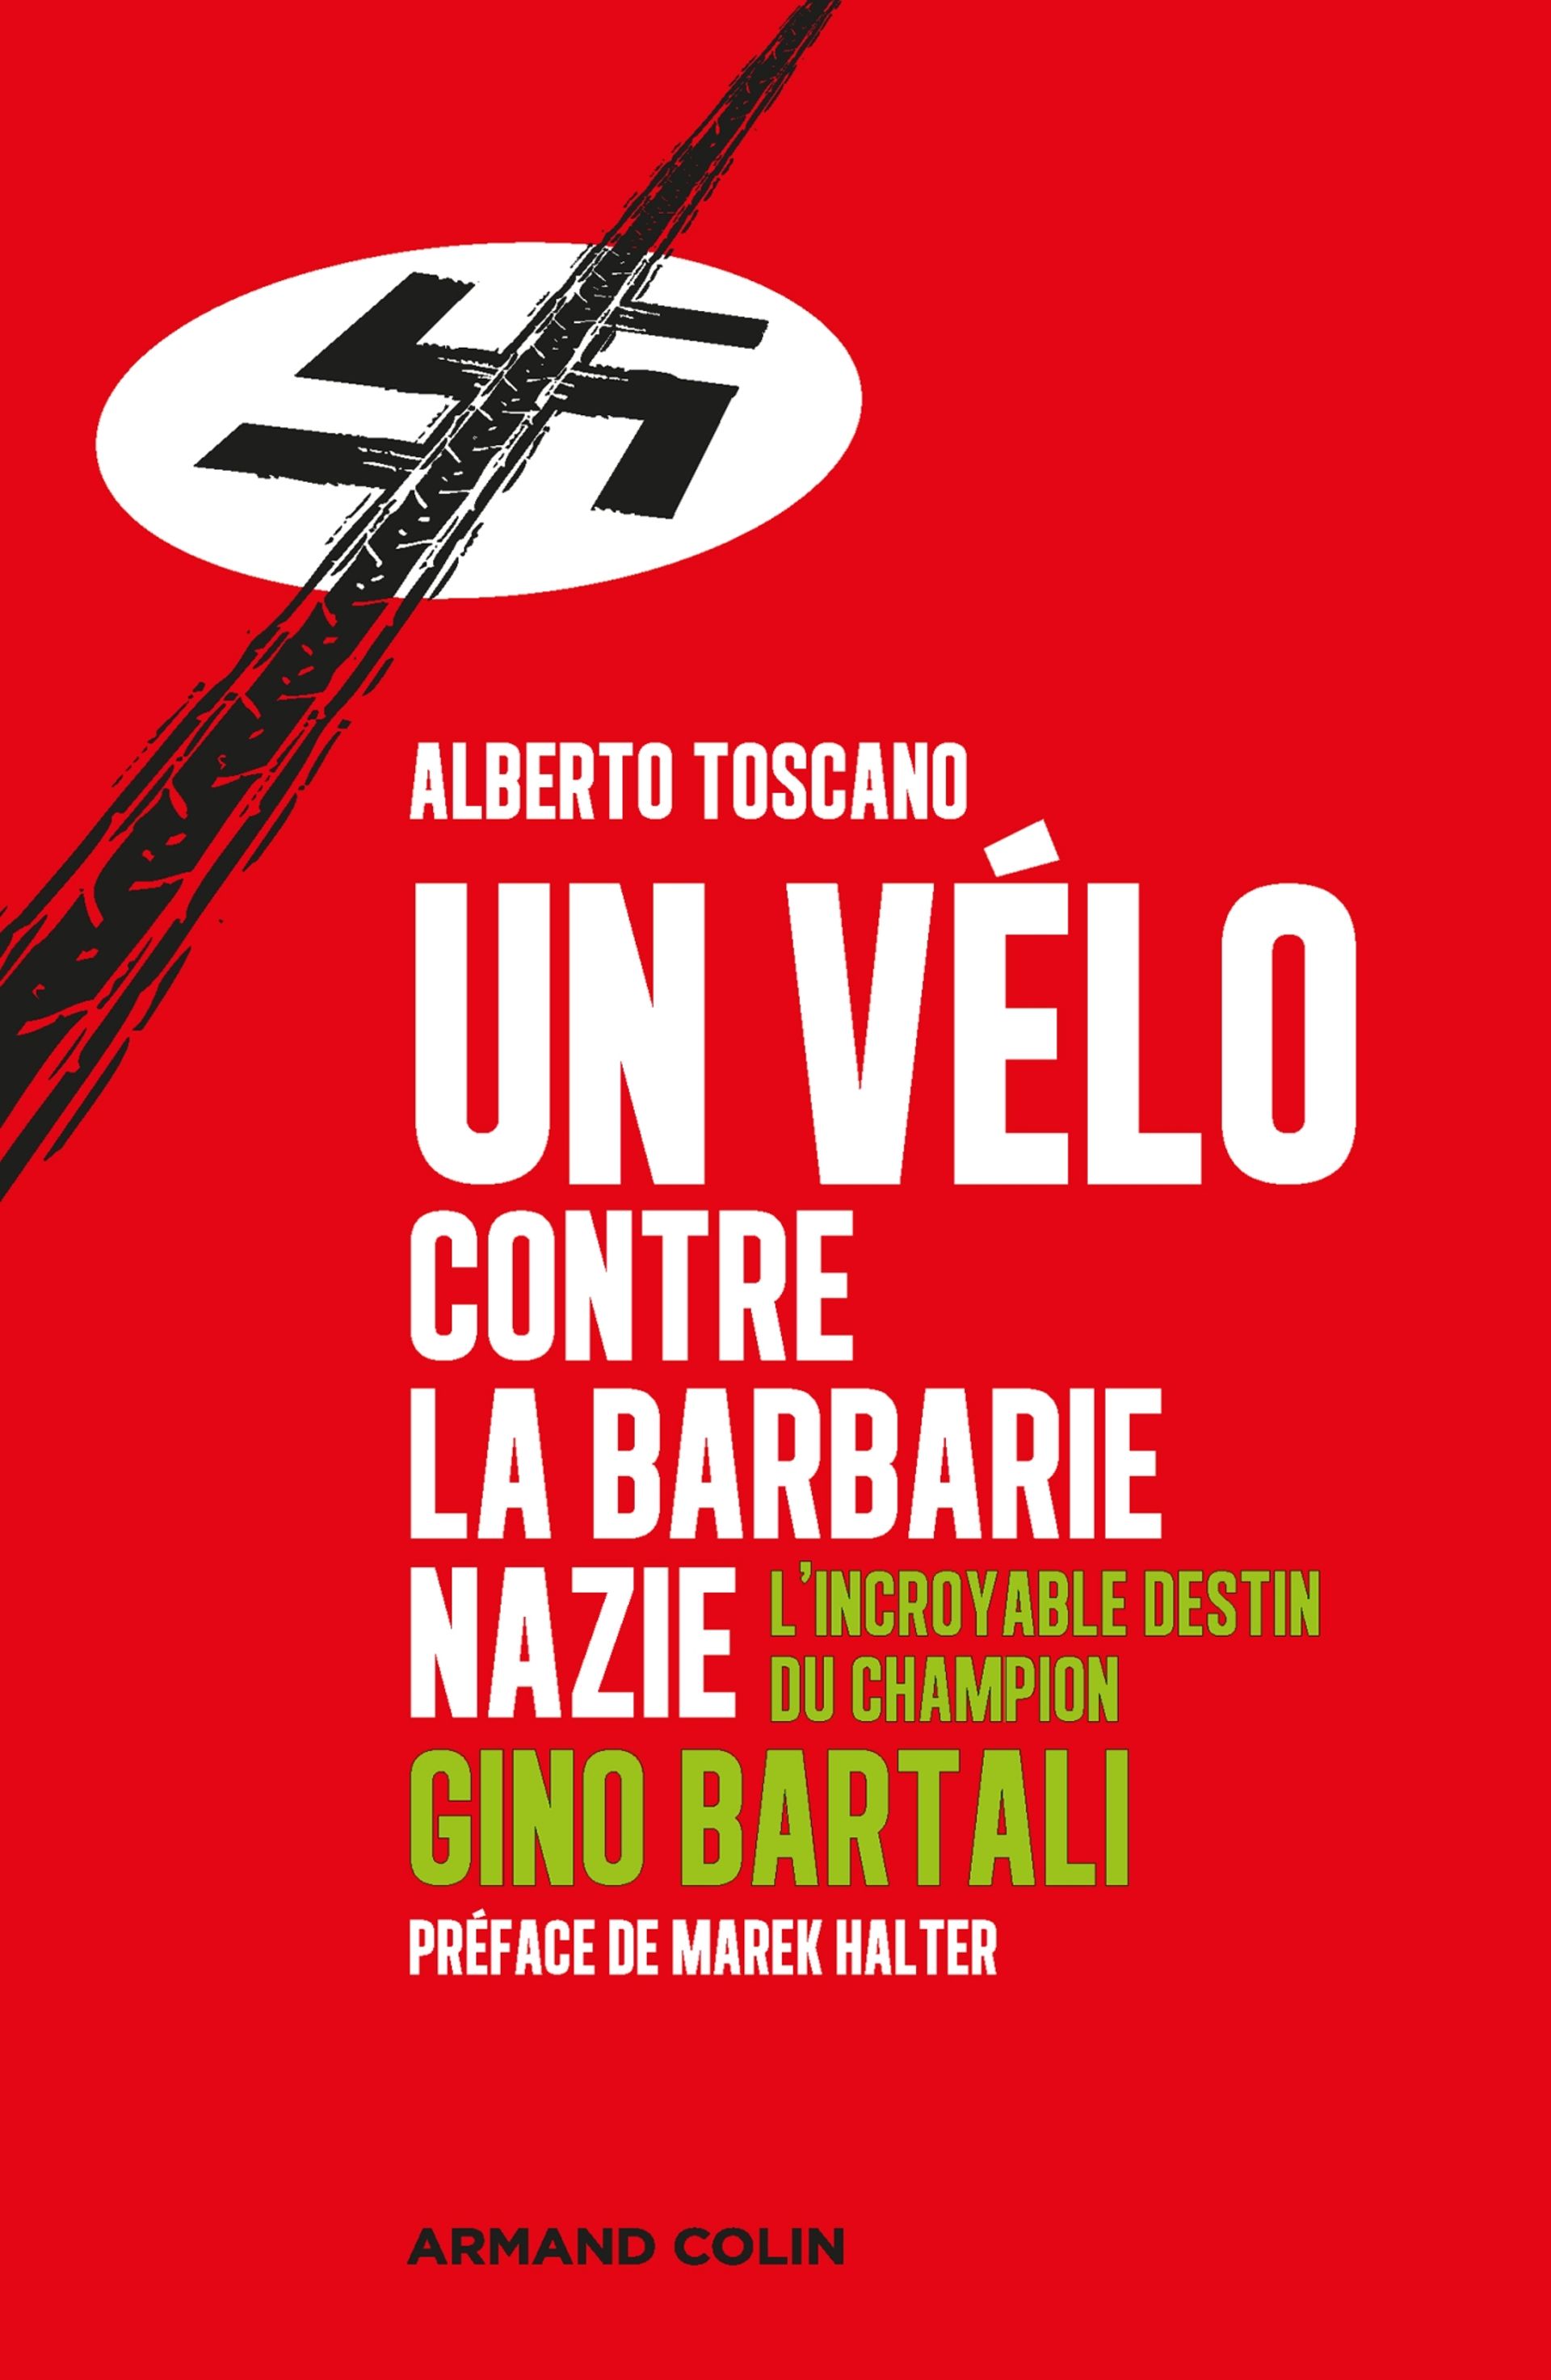 Gino Bartali, raconté, dans un livre, par Alberto Toscano